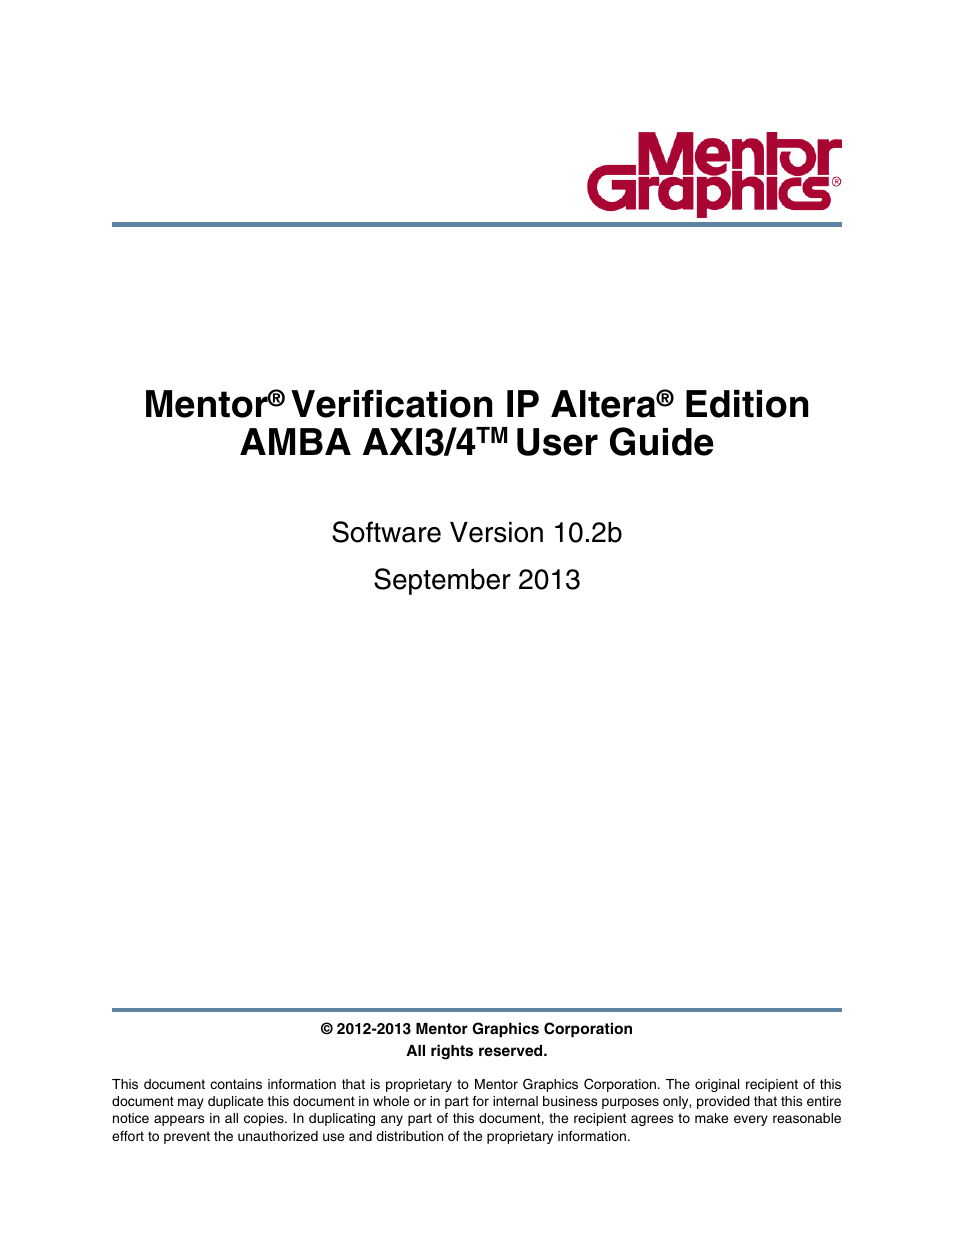 Altera Mentor Verification IP Altera Edition AMBA AXI3/4TM User Manual | 783 pages